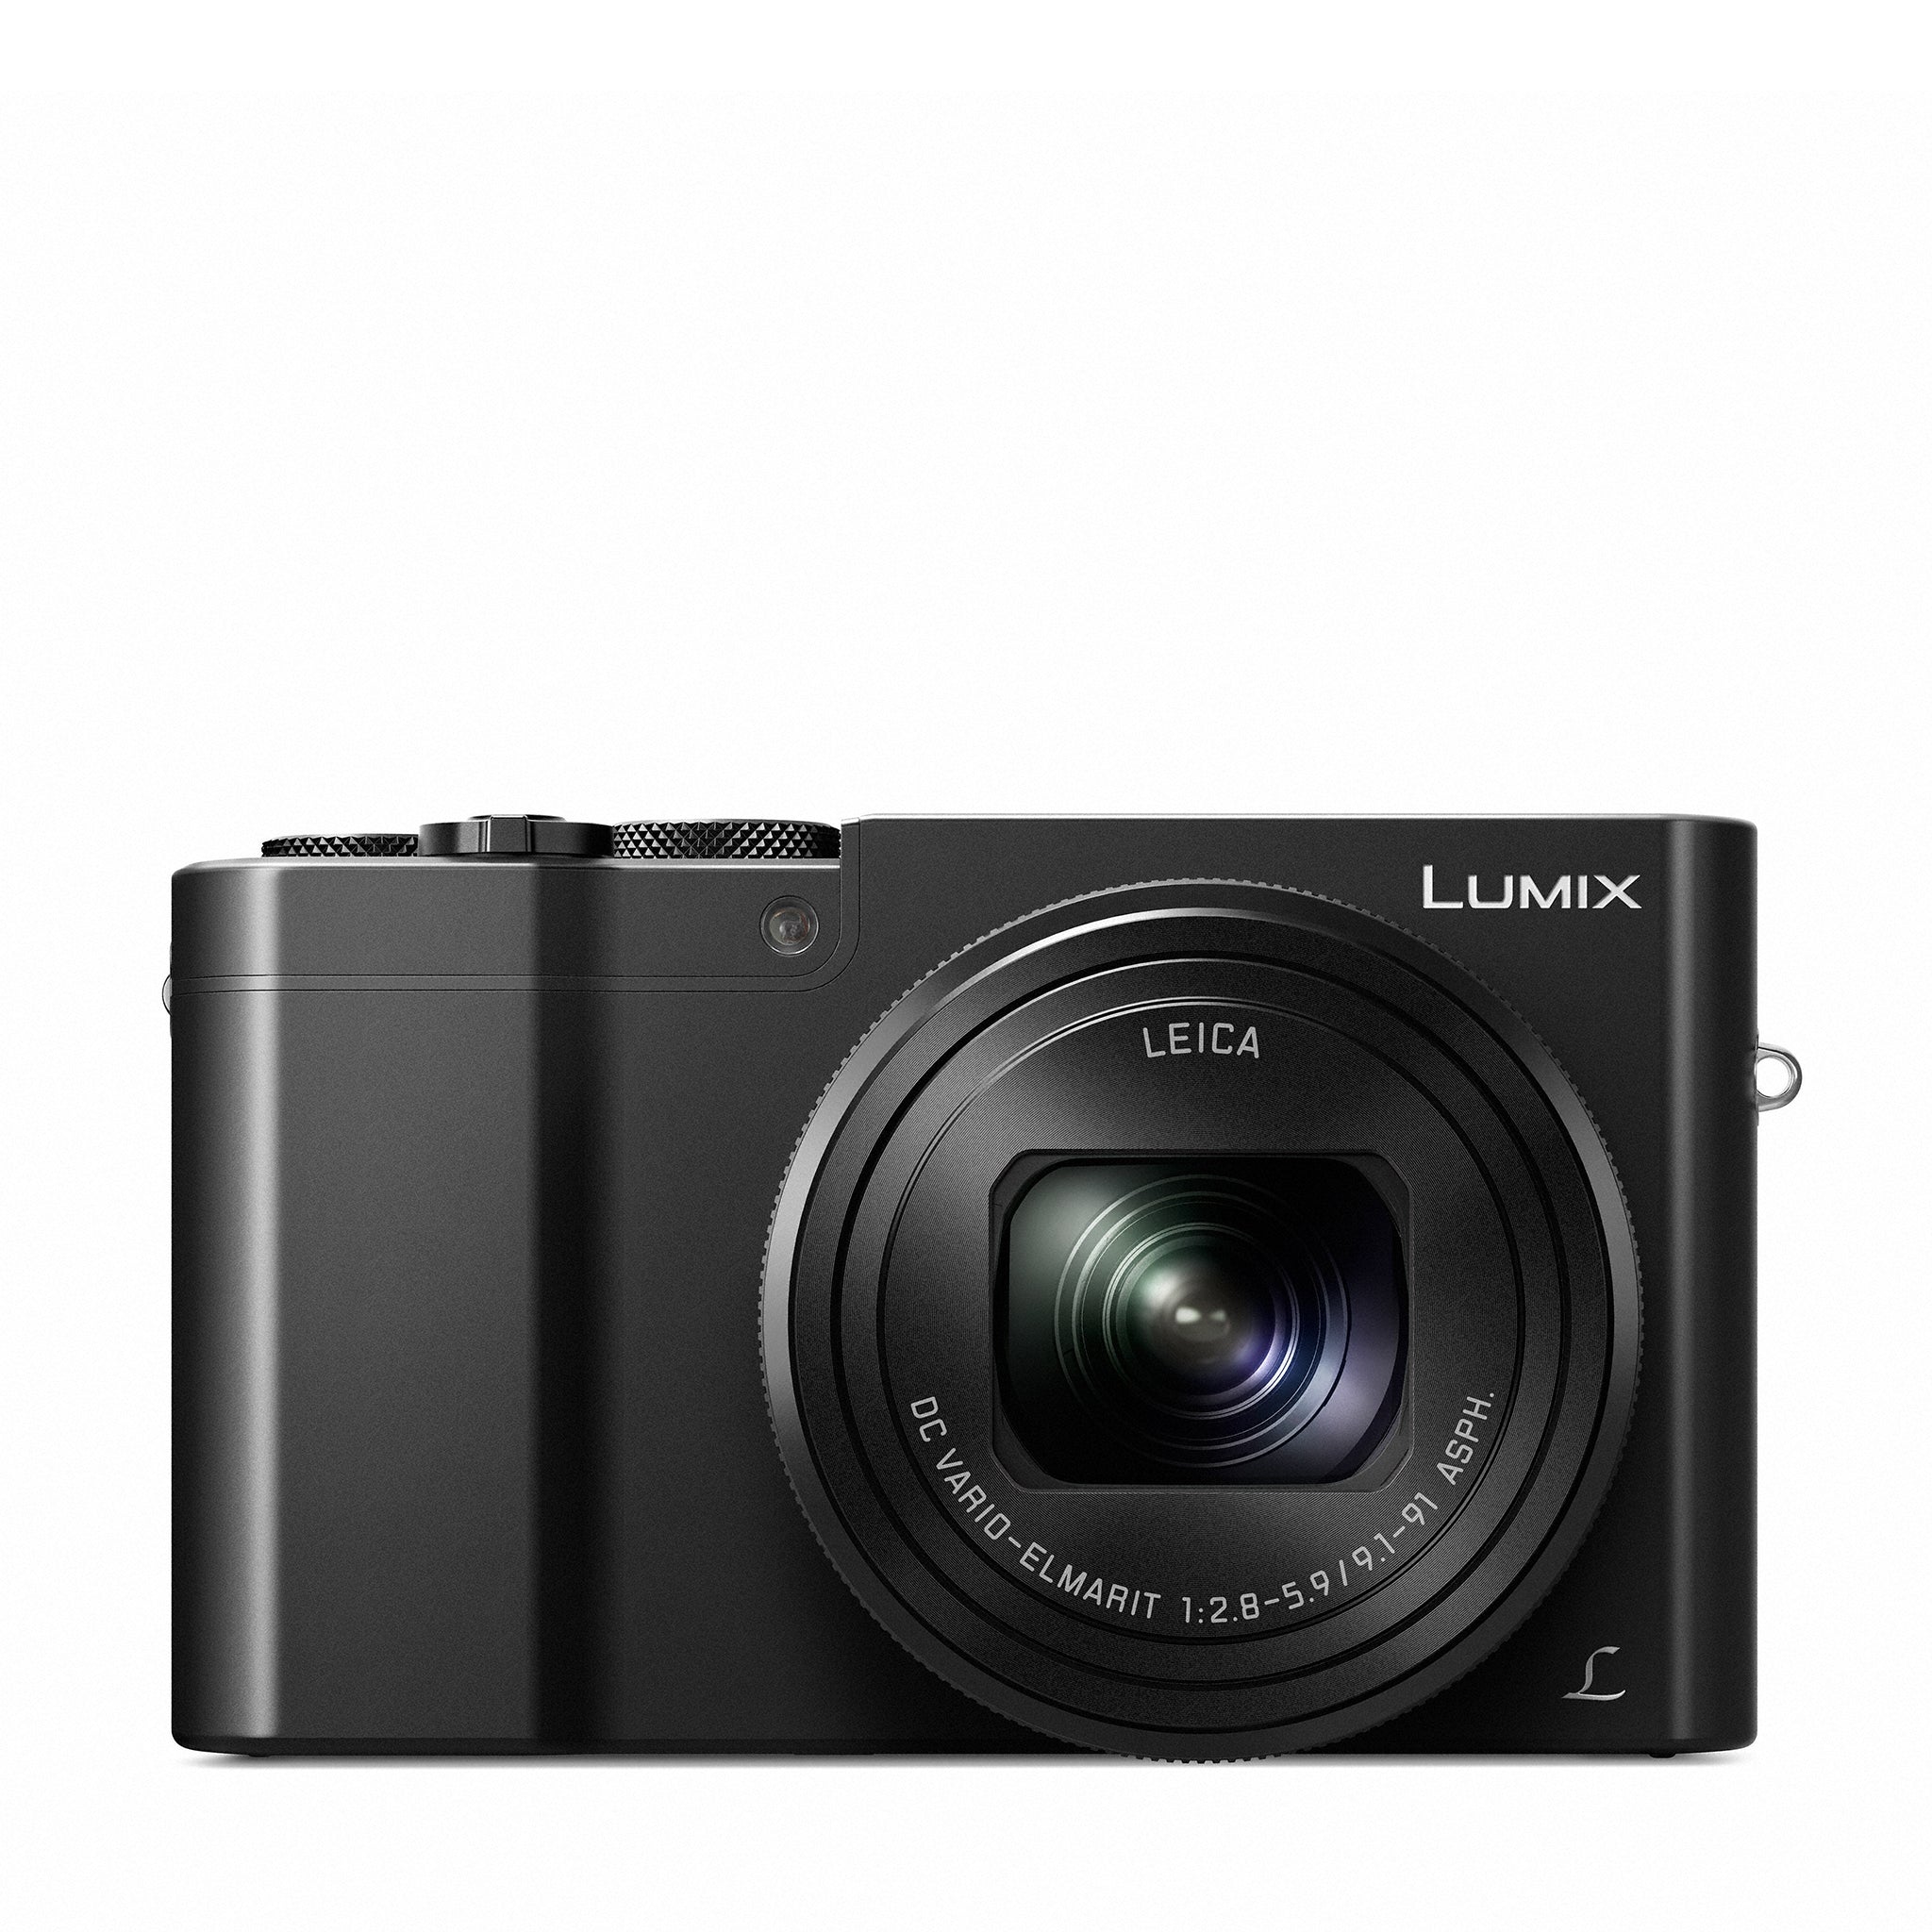 ZS100 Digital Camera + 25-250mm F2.8-5.9 Lens